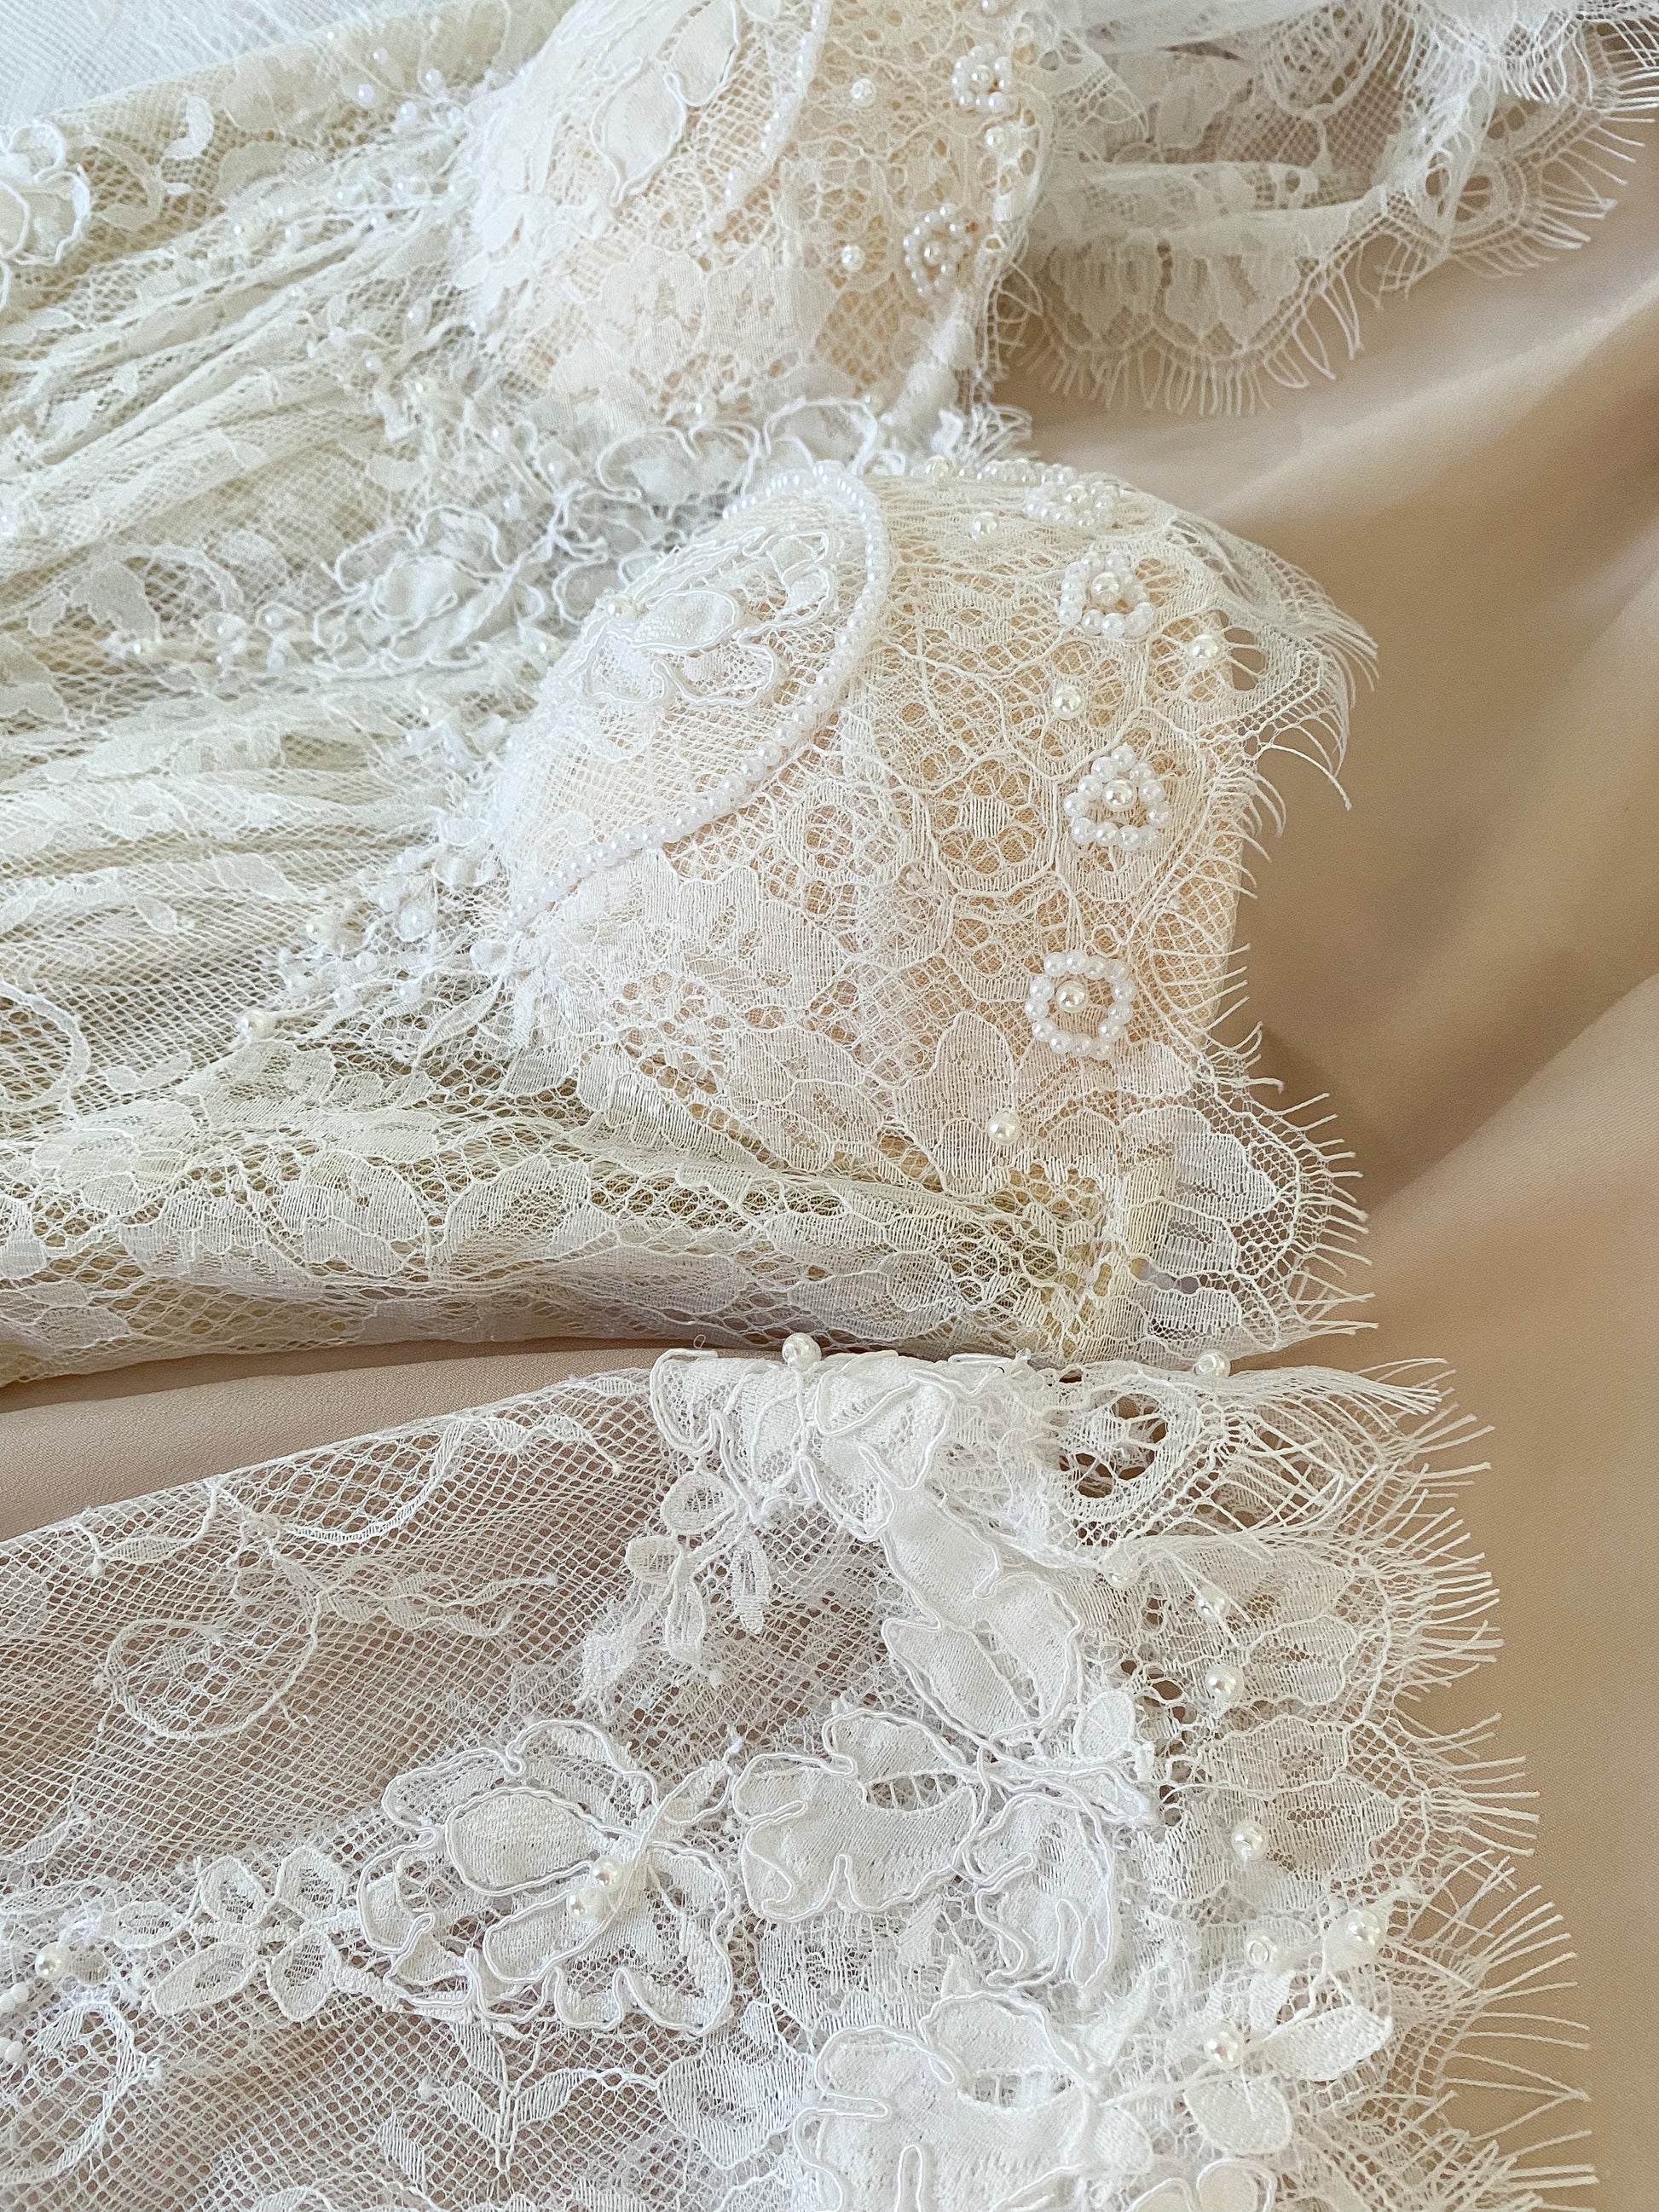 Andrea & Leo Couture GISELLE Dress A1073W Lace Wedding Dress Long Sleeve  Mermaid